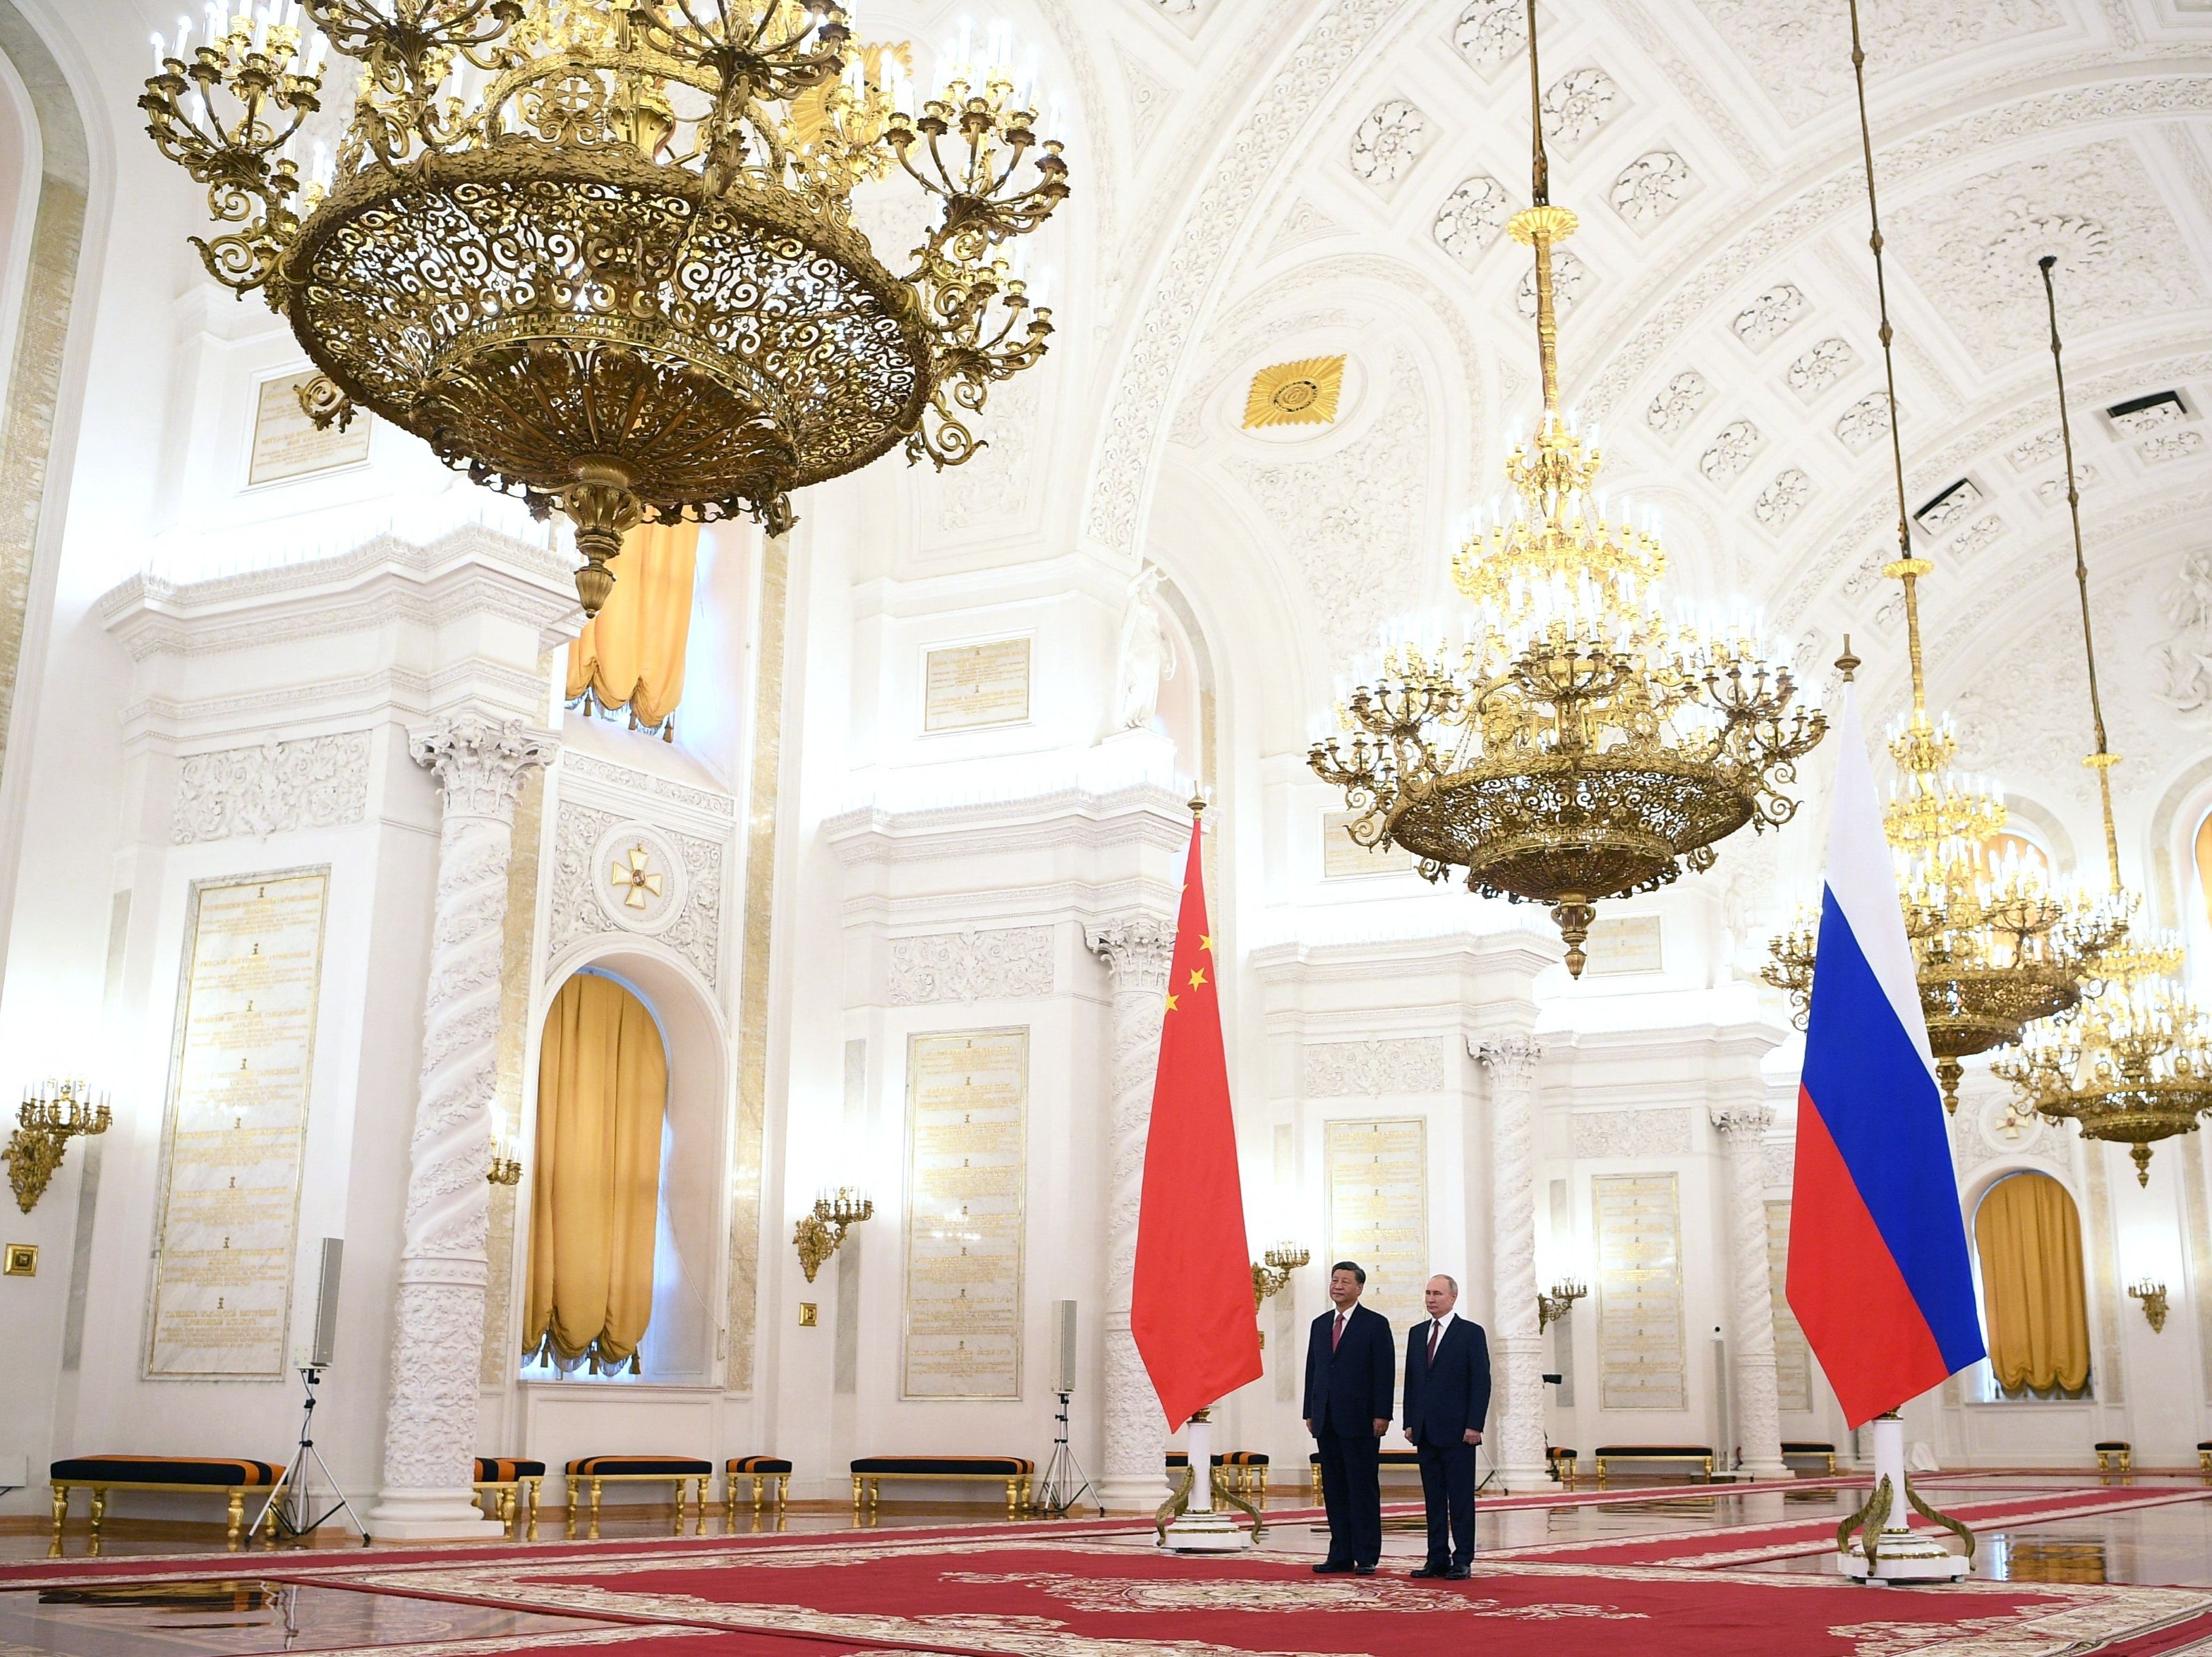 Vladimir Putin meets Xi Jinping at the Kremlin in Moscow in 2013